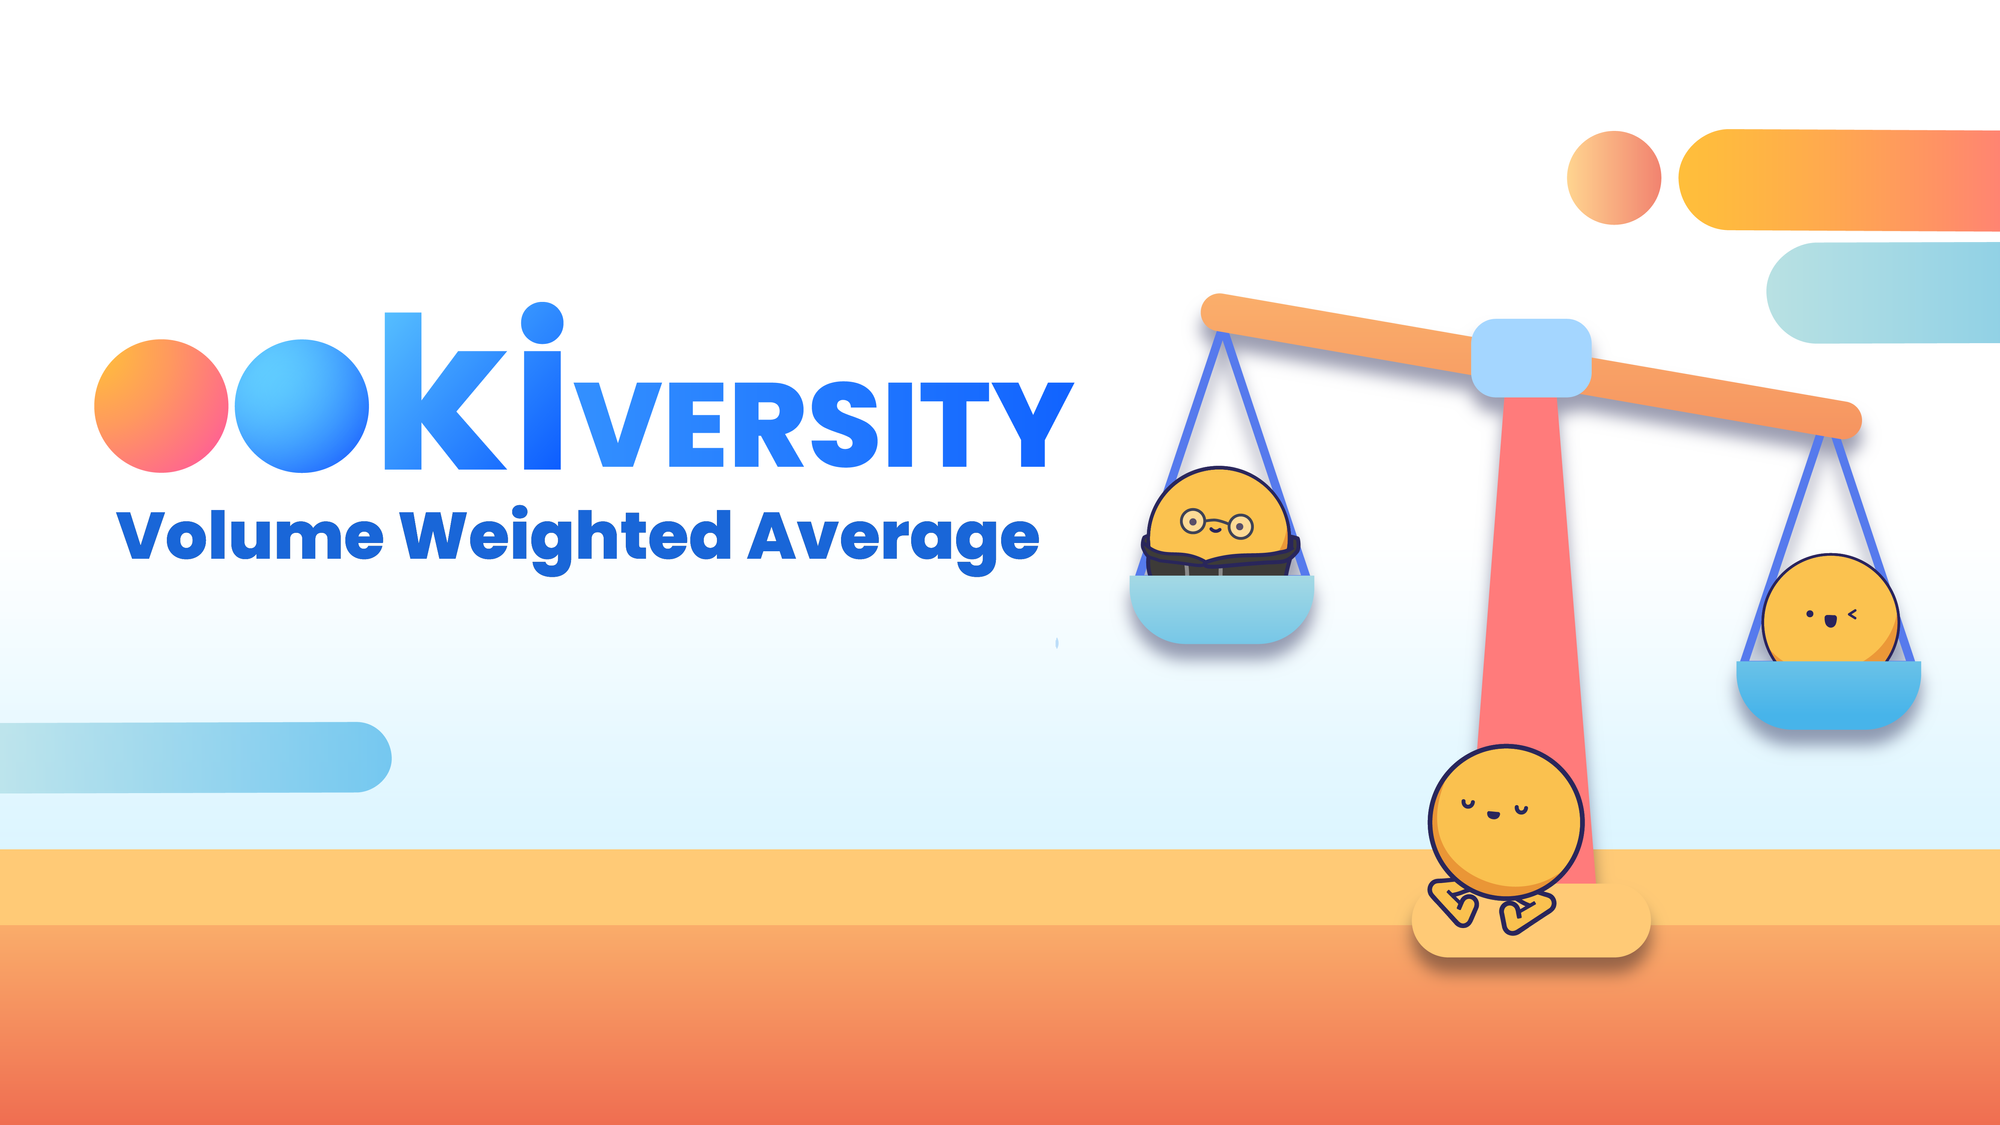 Ookiversity: Volume Weighted Average Price